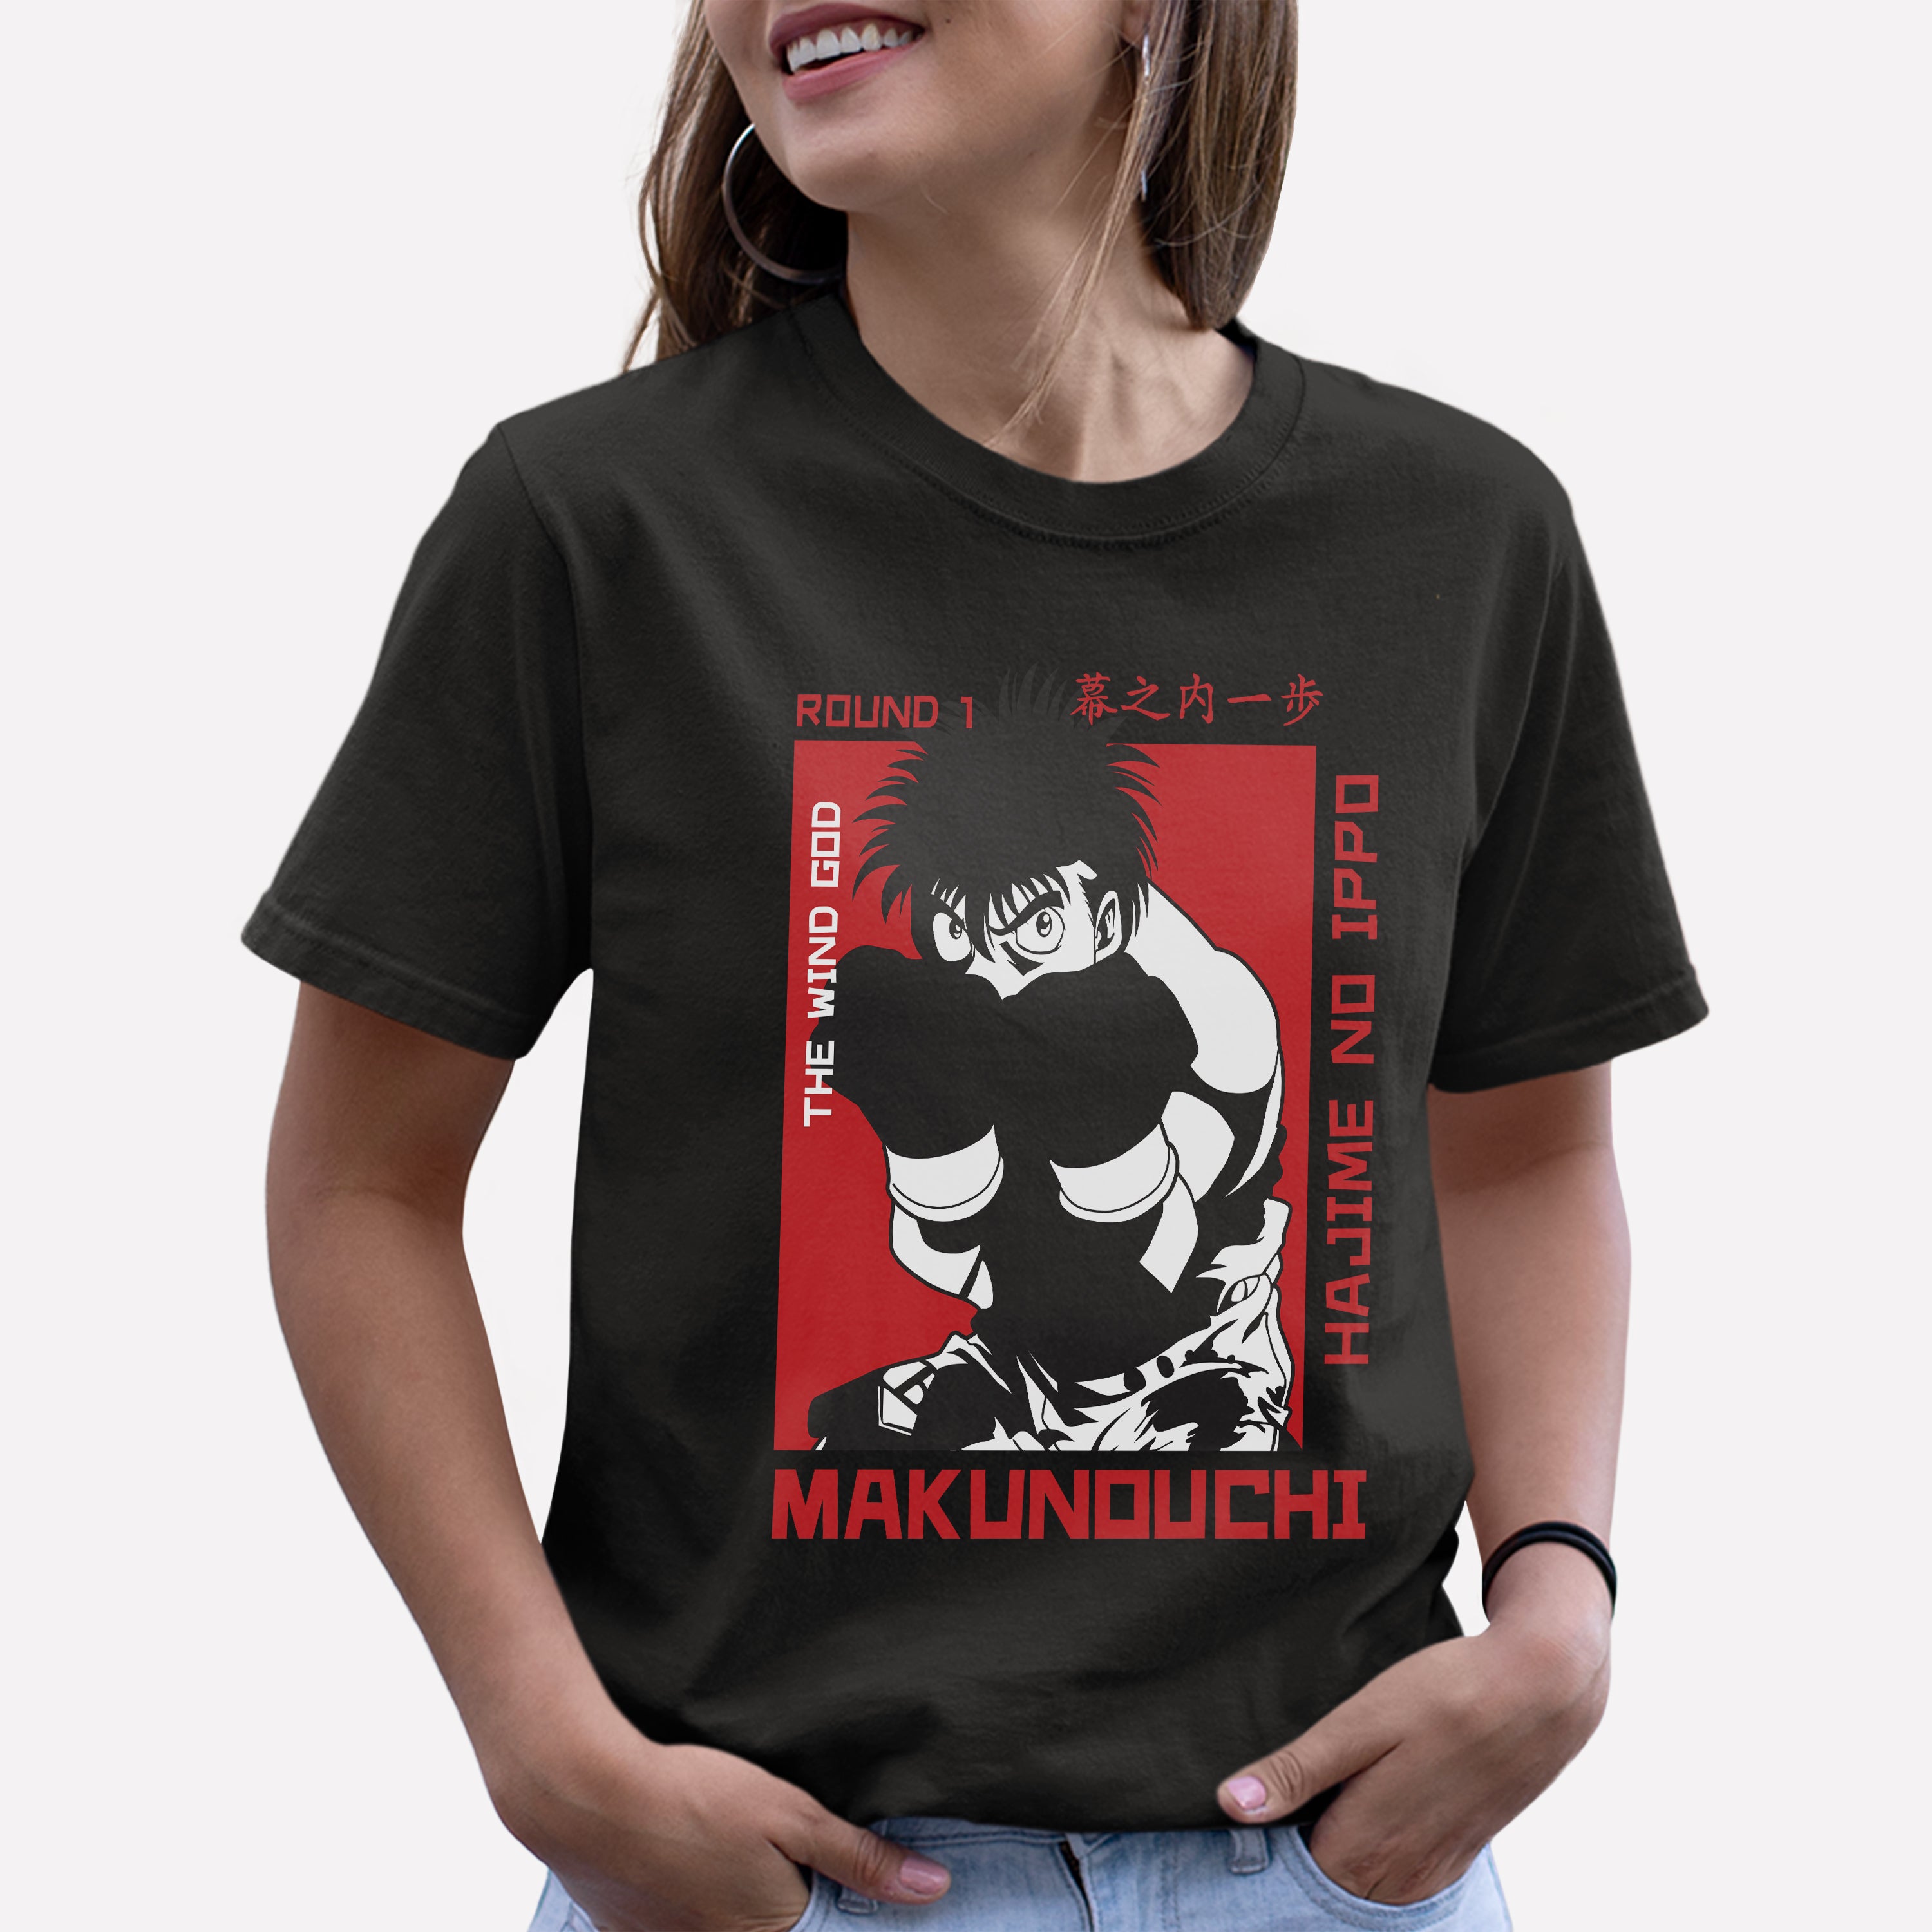 Camisa Ippo Makunouchi - Camisas Hajime no Ippo Estampa Total